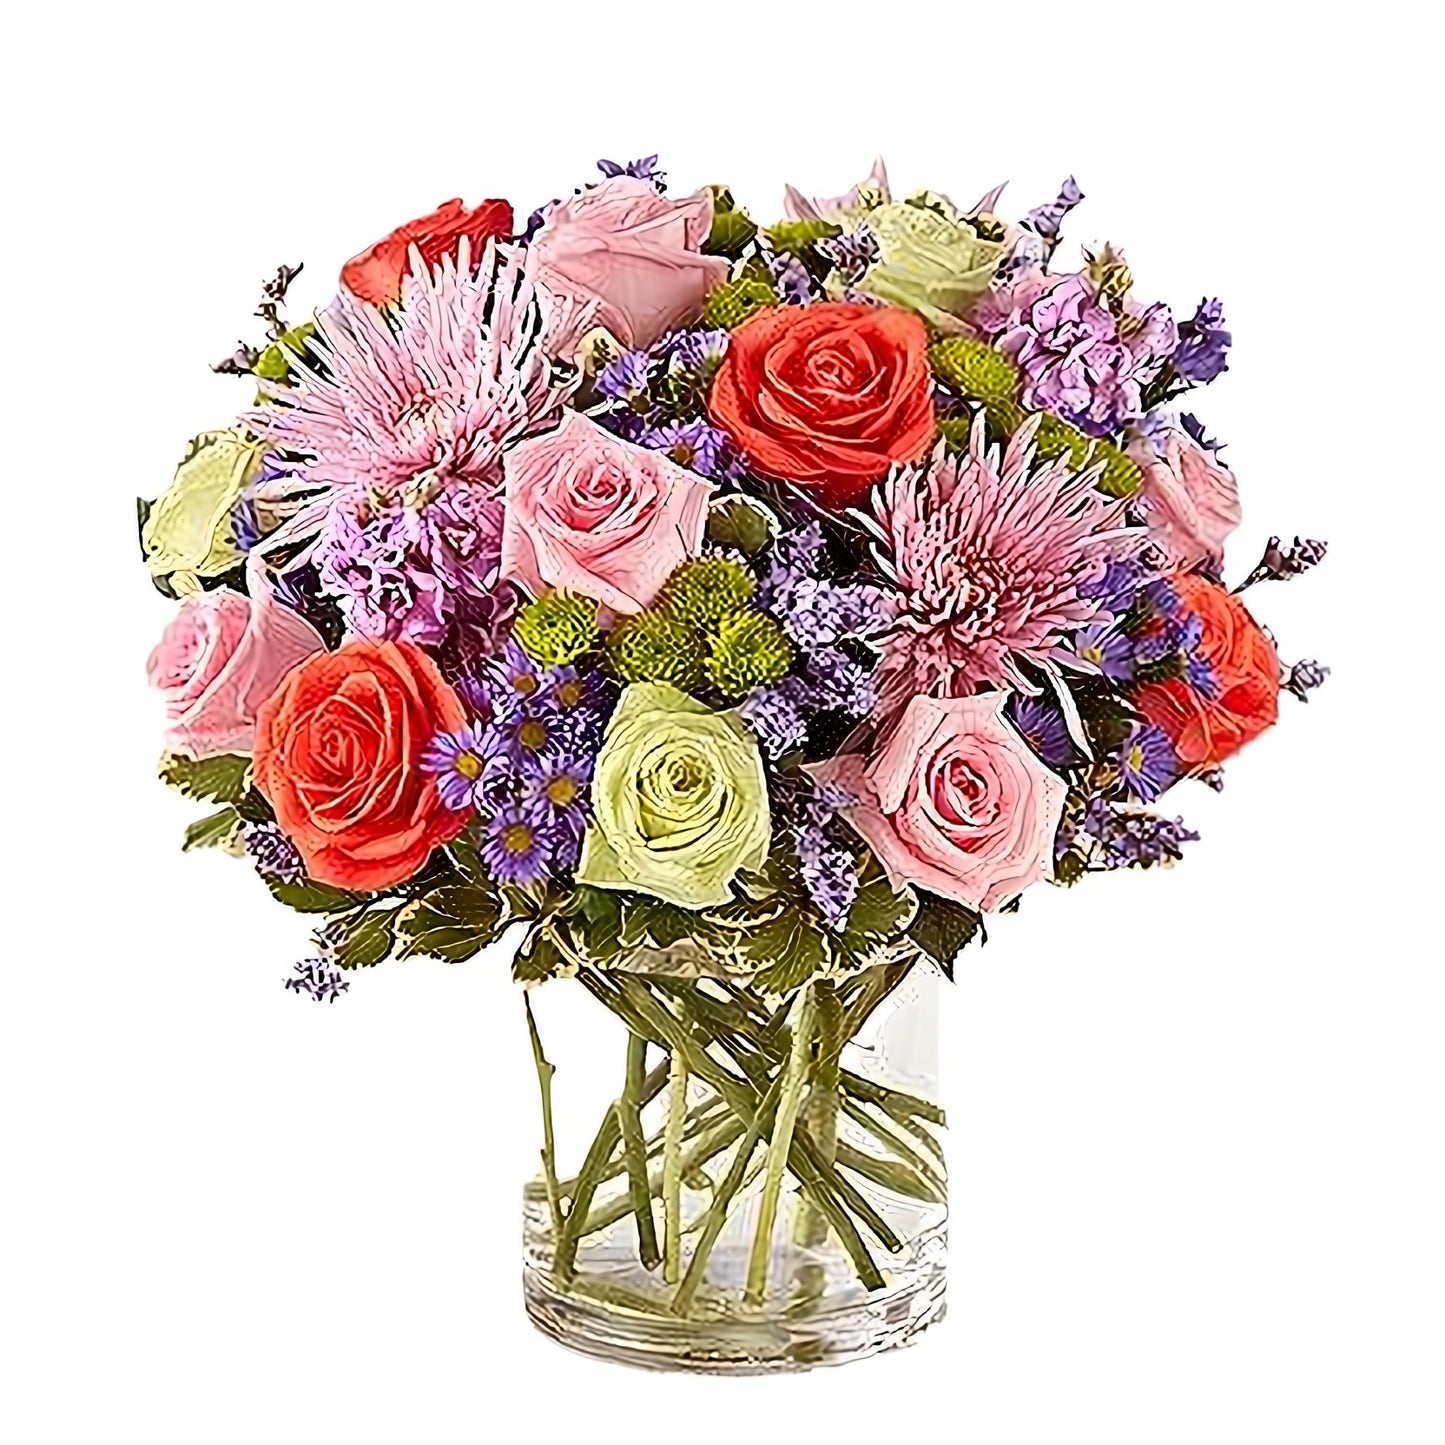 Beauty in Abundance - Floral Arrangement - Flower Delivery Brooklyn